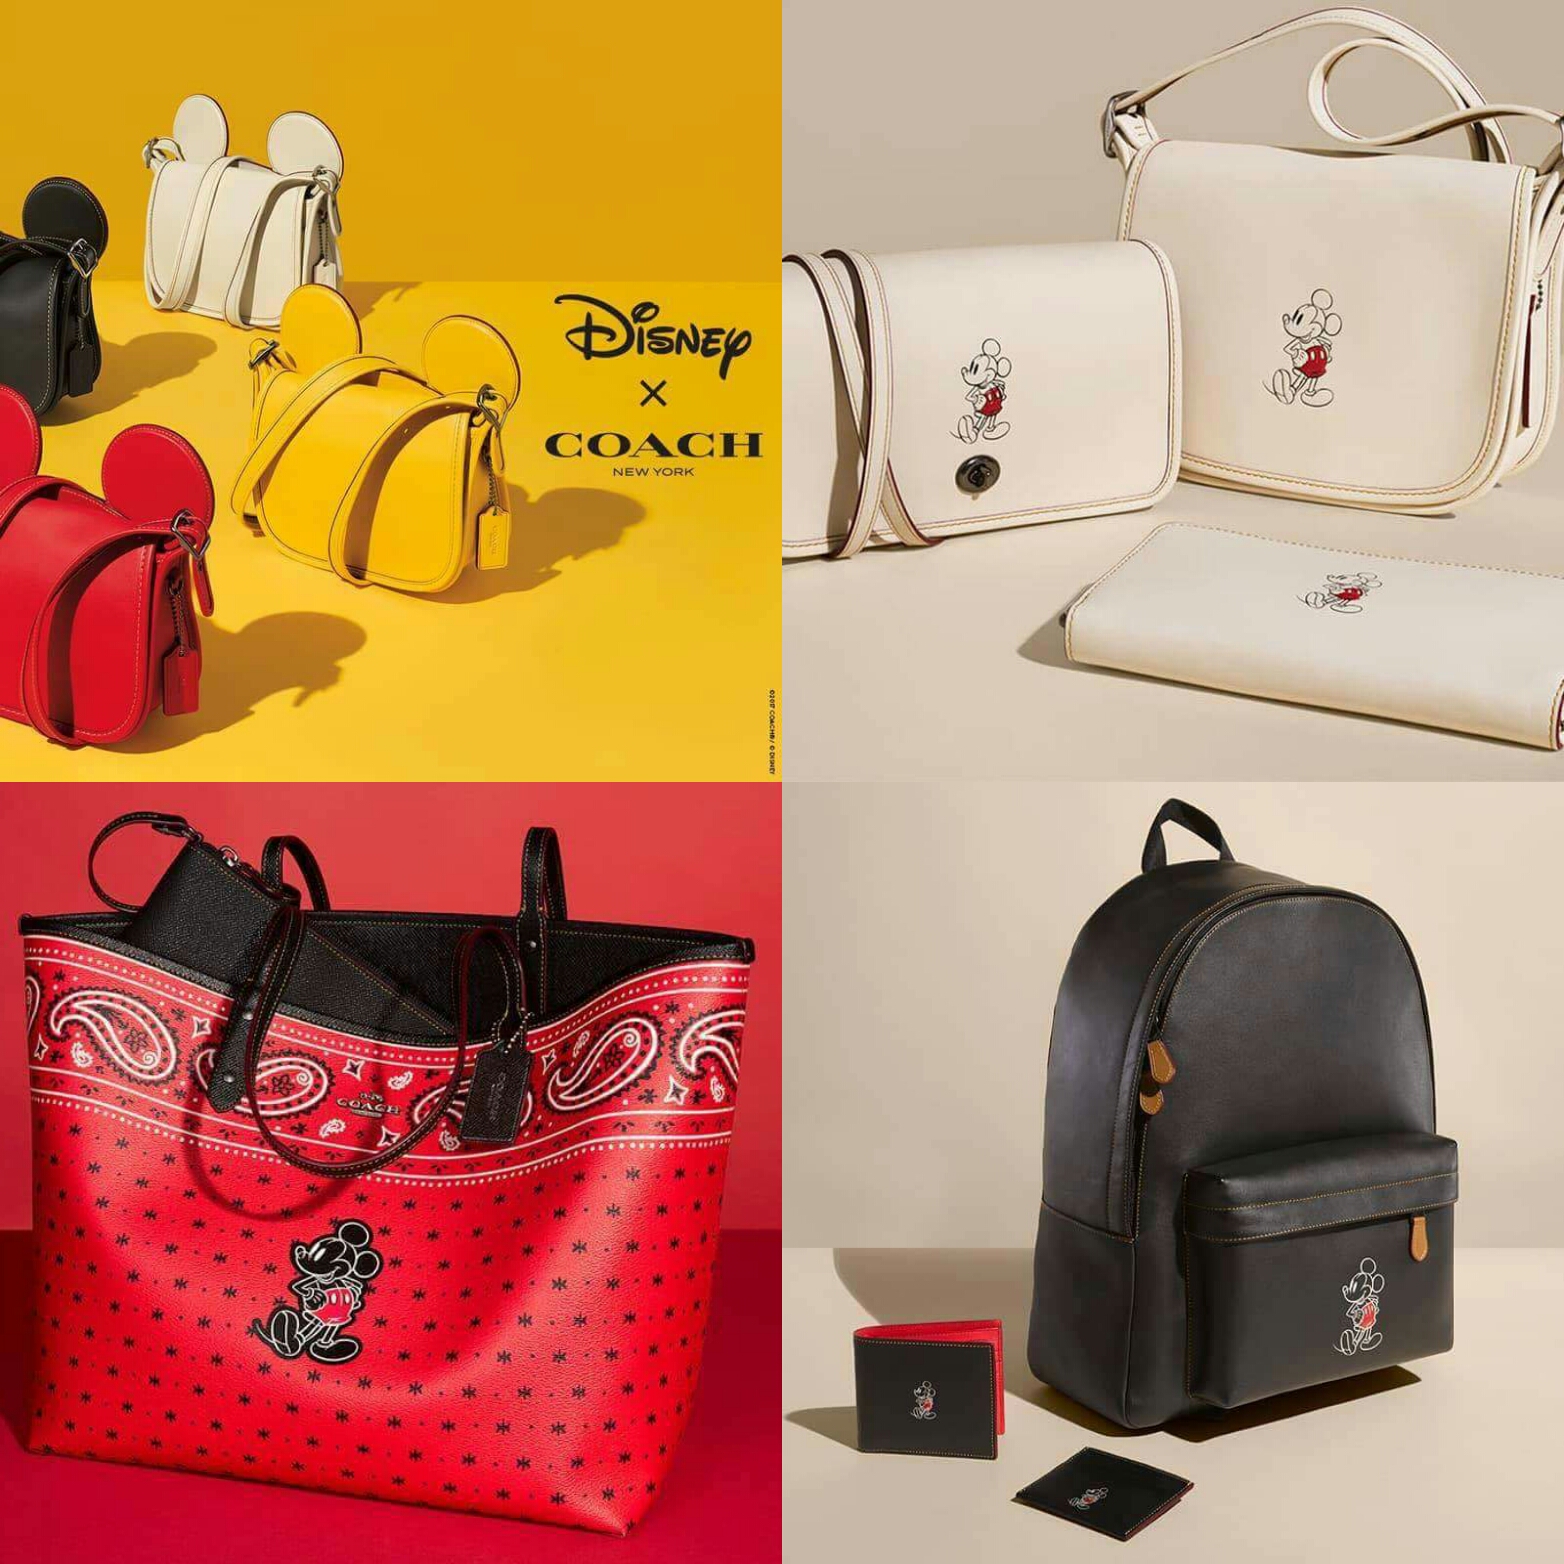 Disney X Coach outlet collection: Shop bags, clothing, shoes